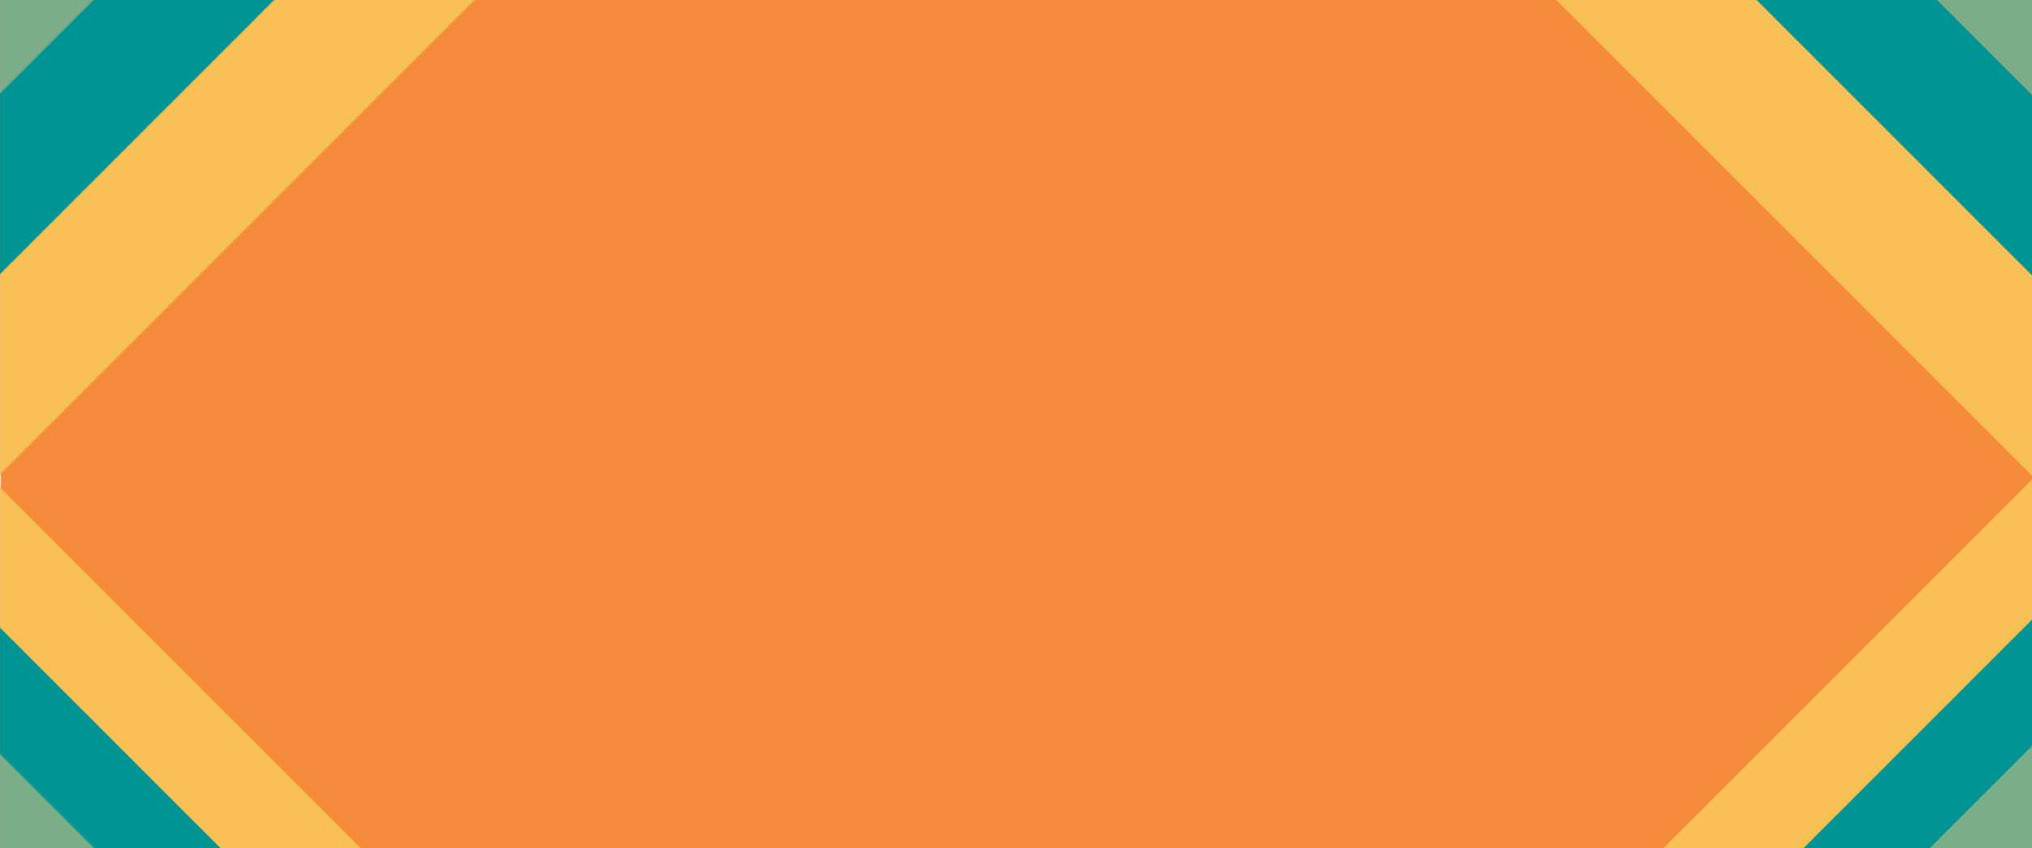 Orange background with coloured borders